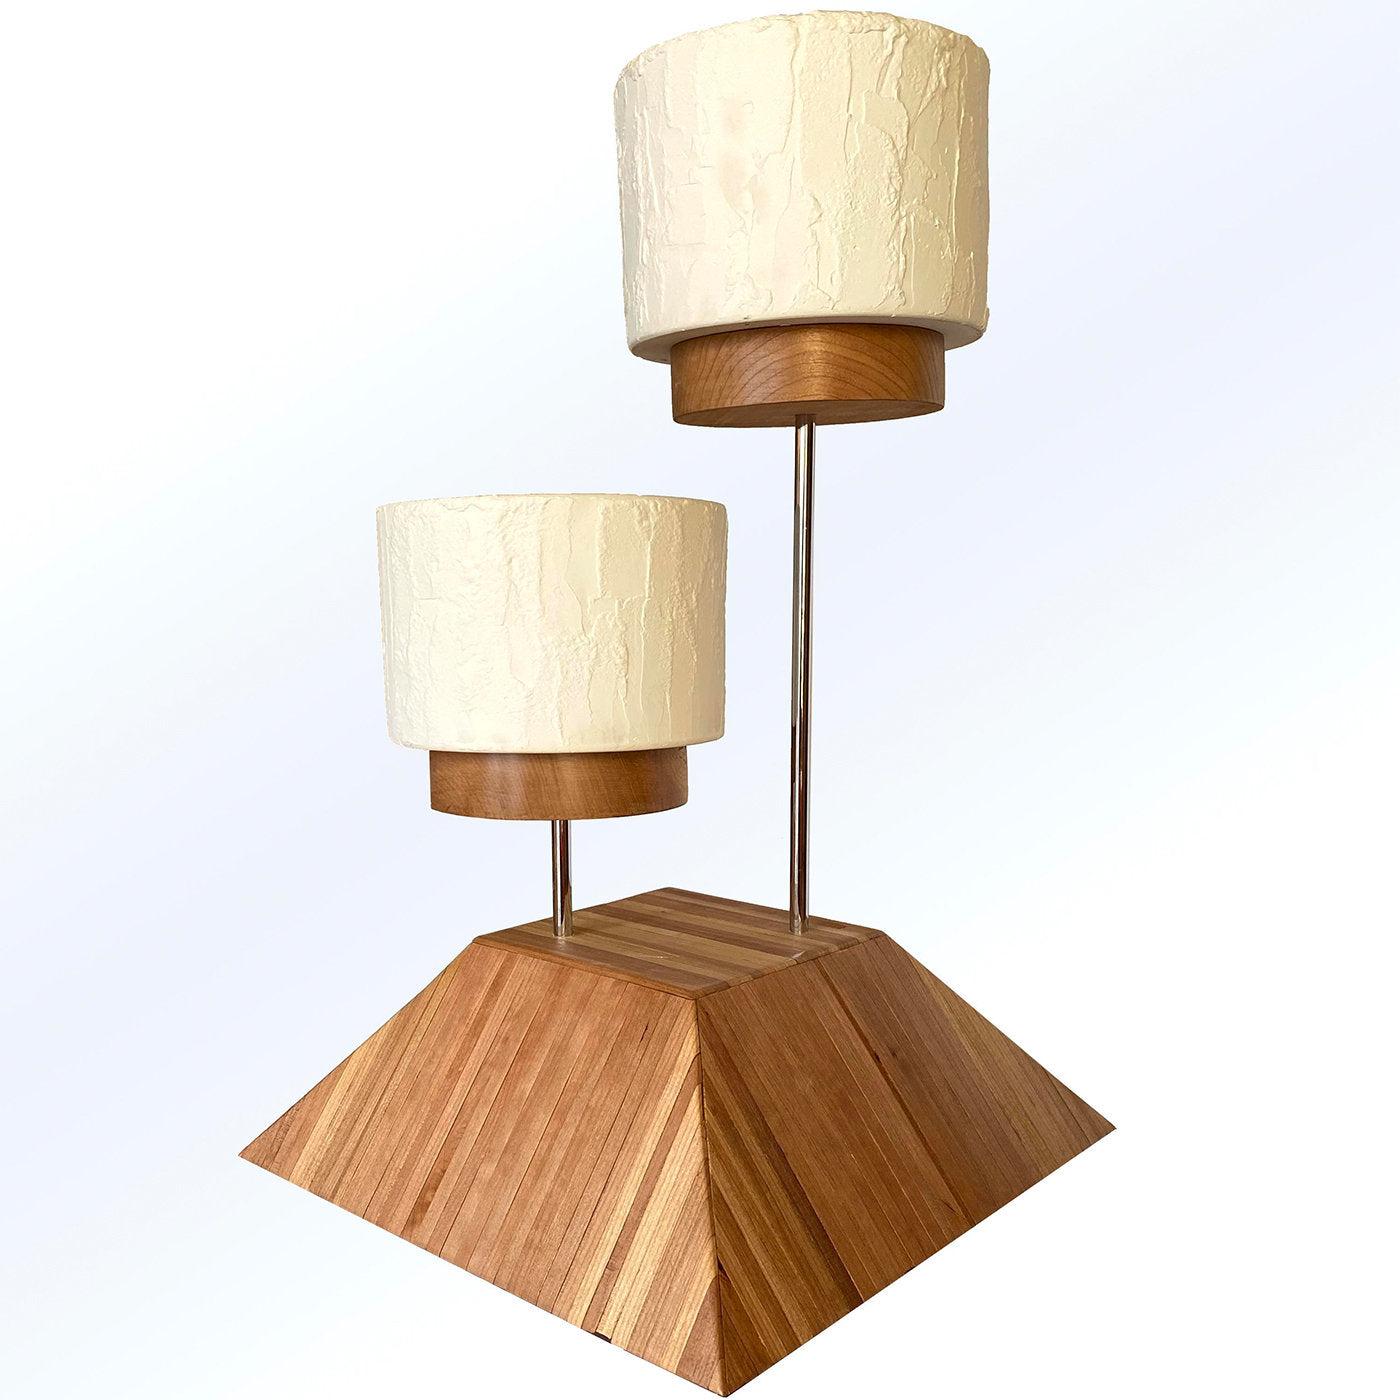 Totem Table Lamp by Mascia Meccani #12 - Alternative view 3